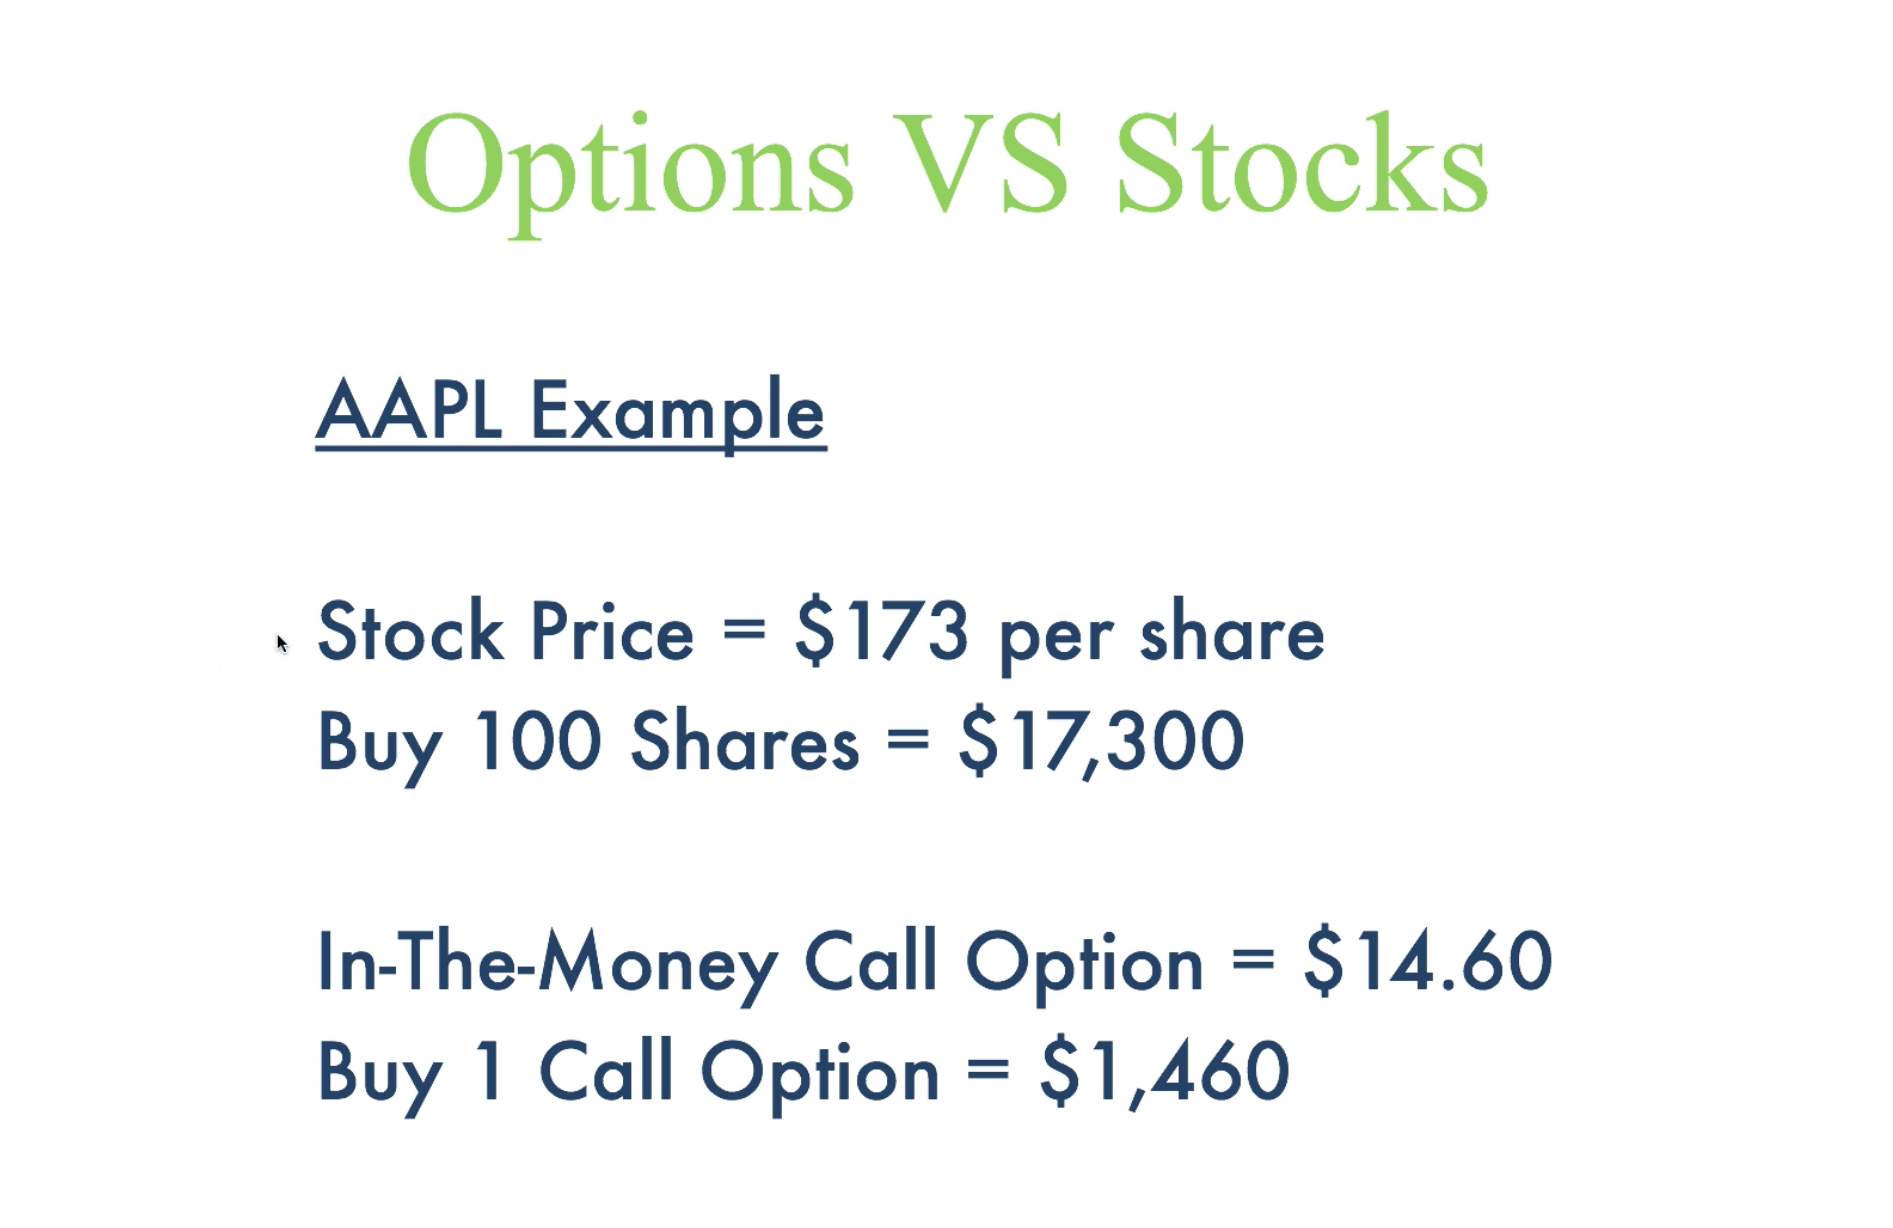 Options VS Stocks Example